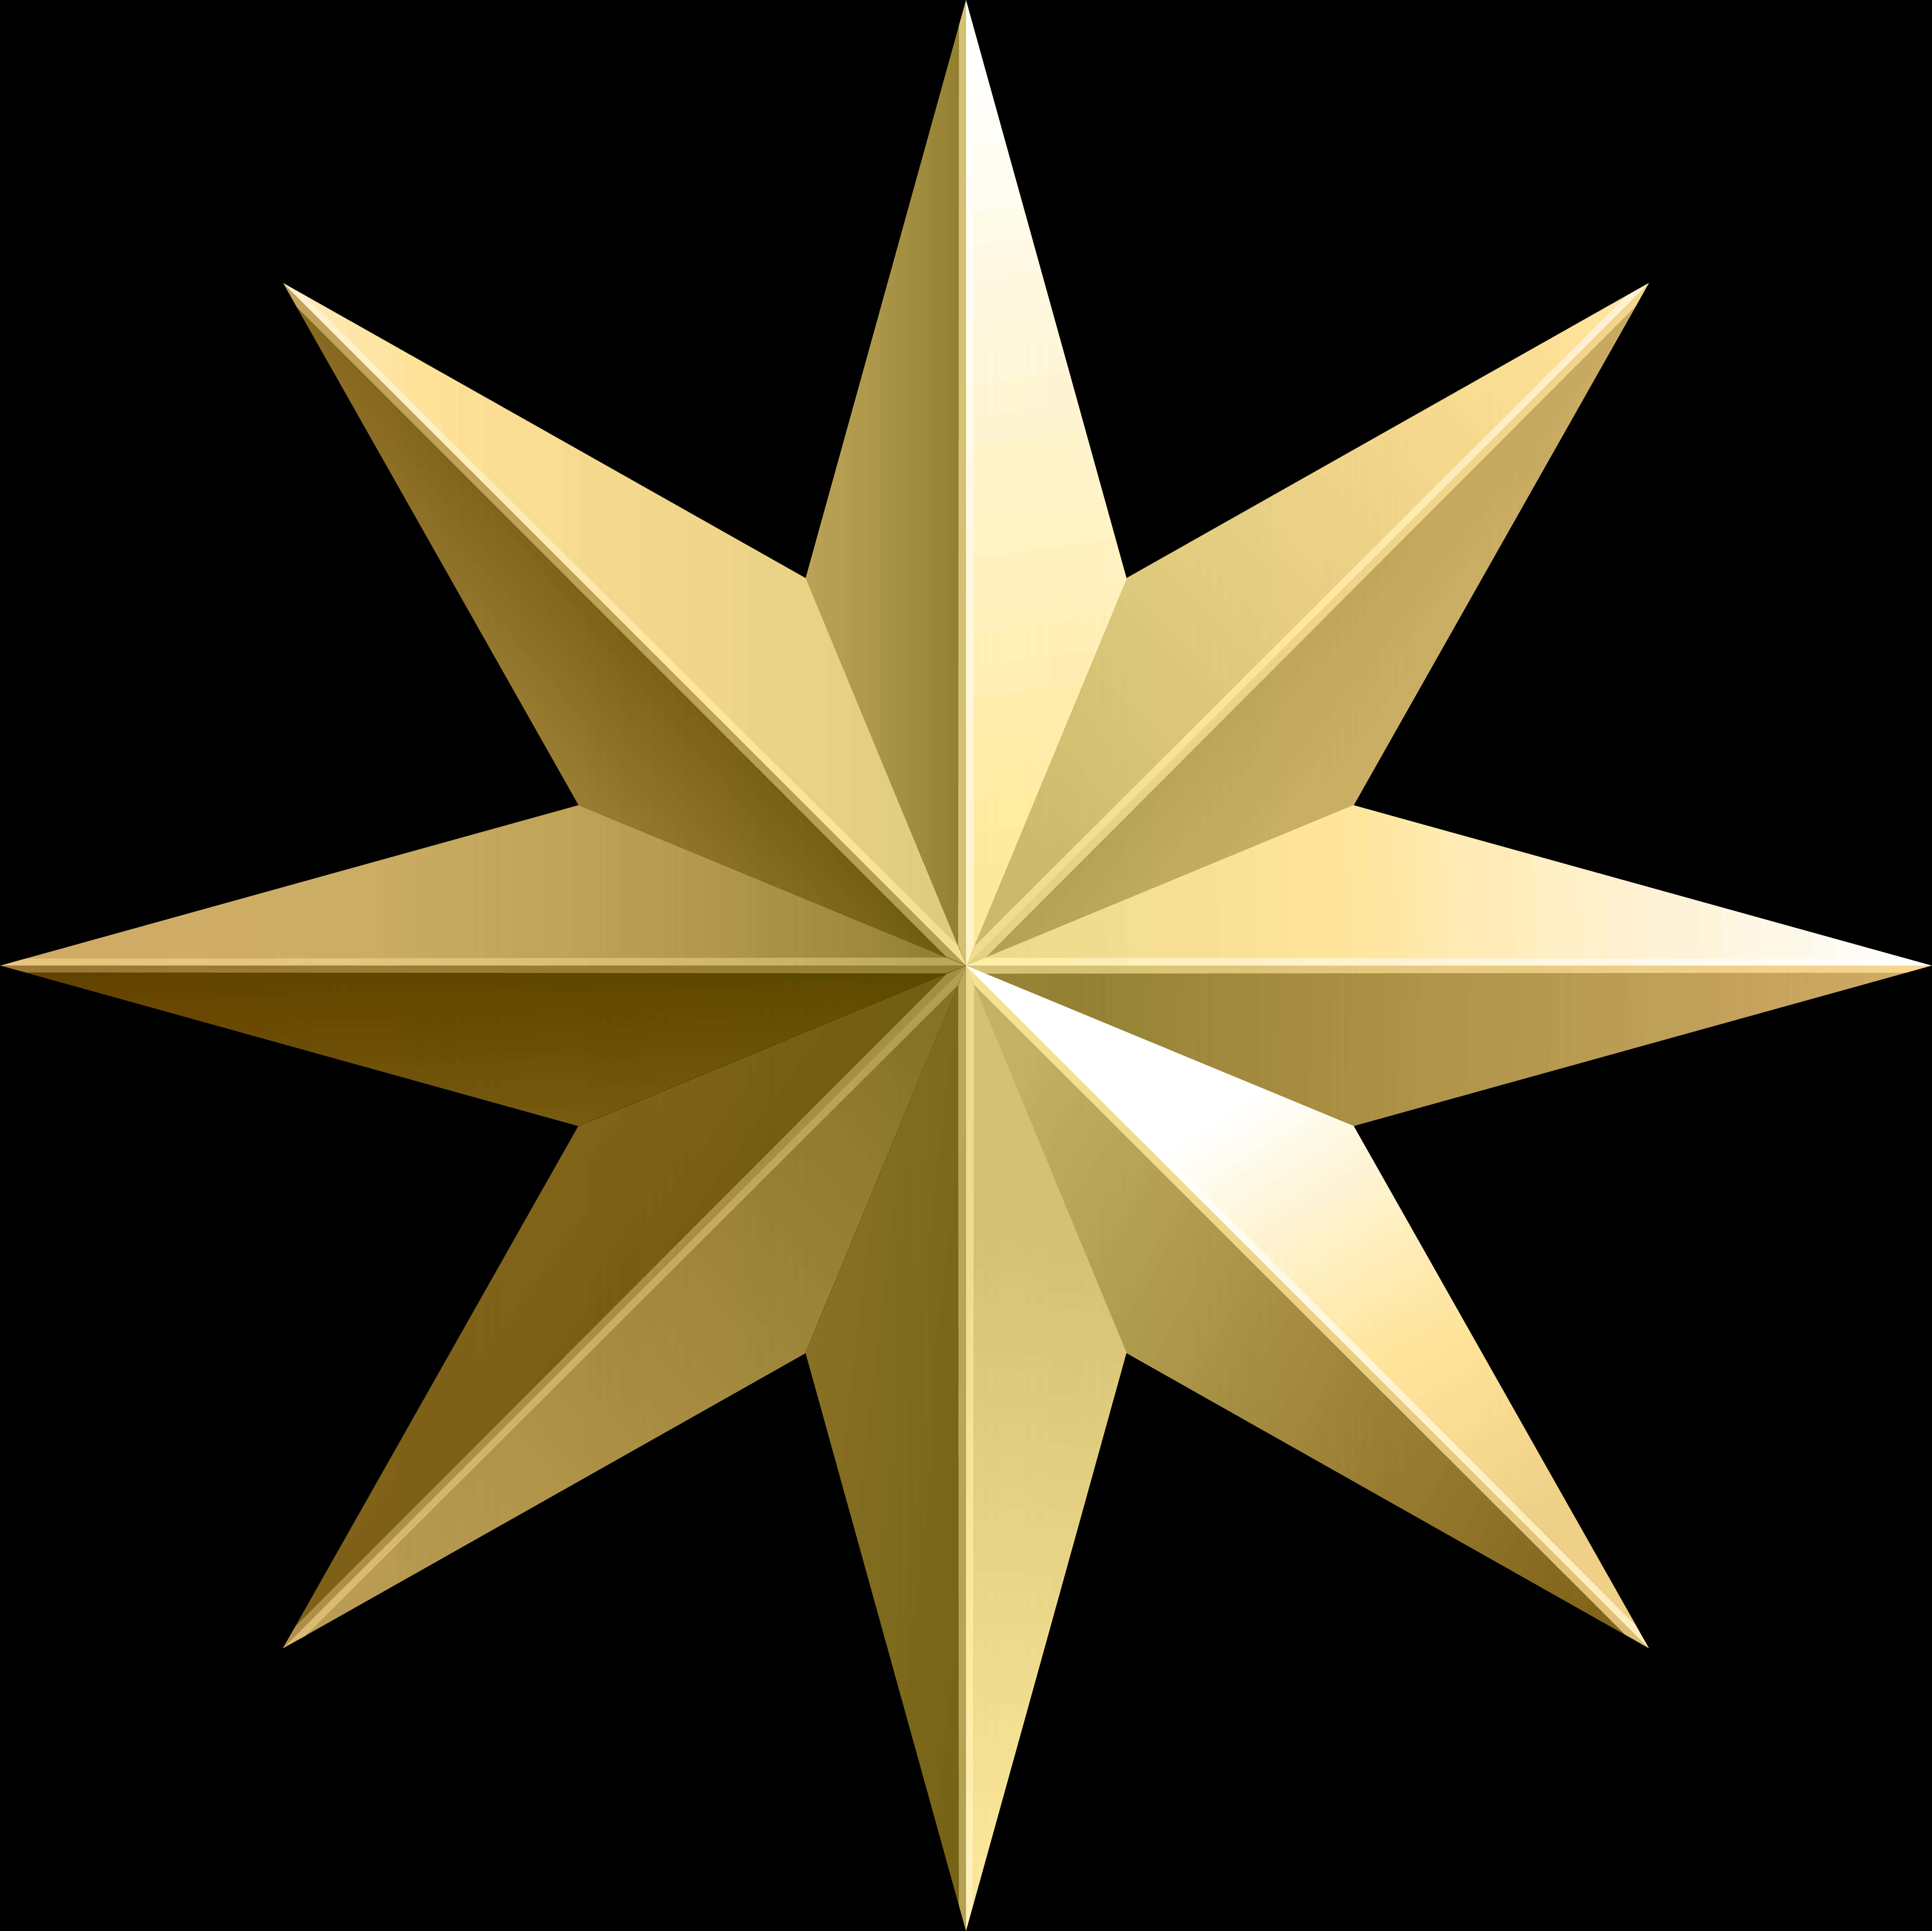 Golden3 D Star Graphic